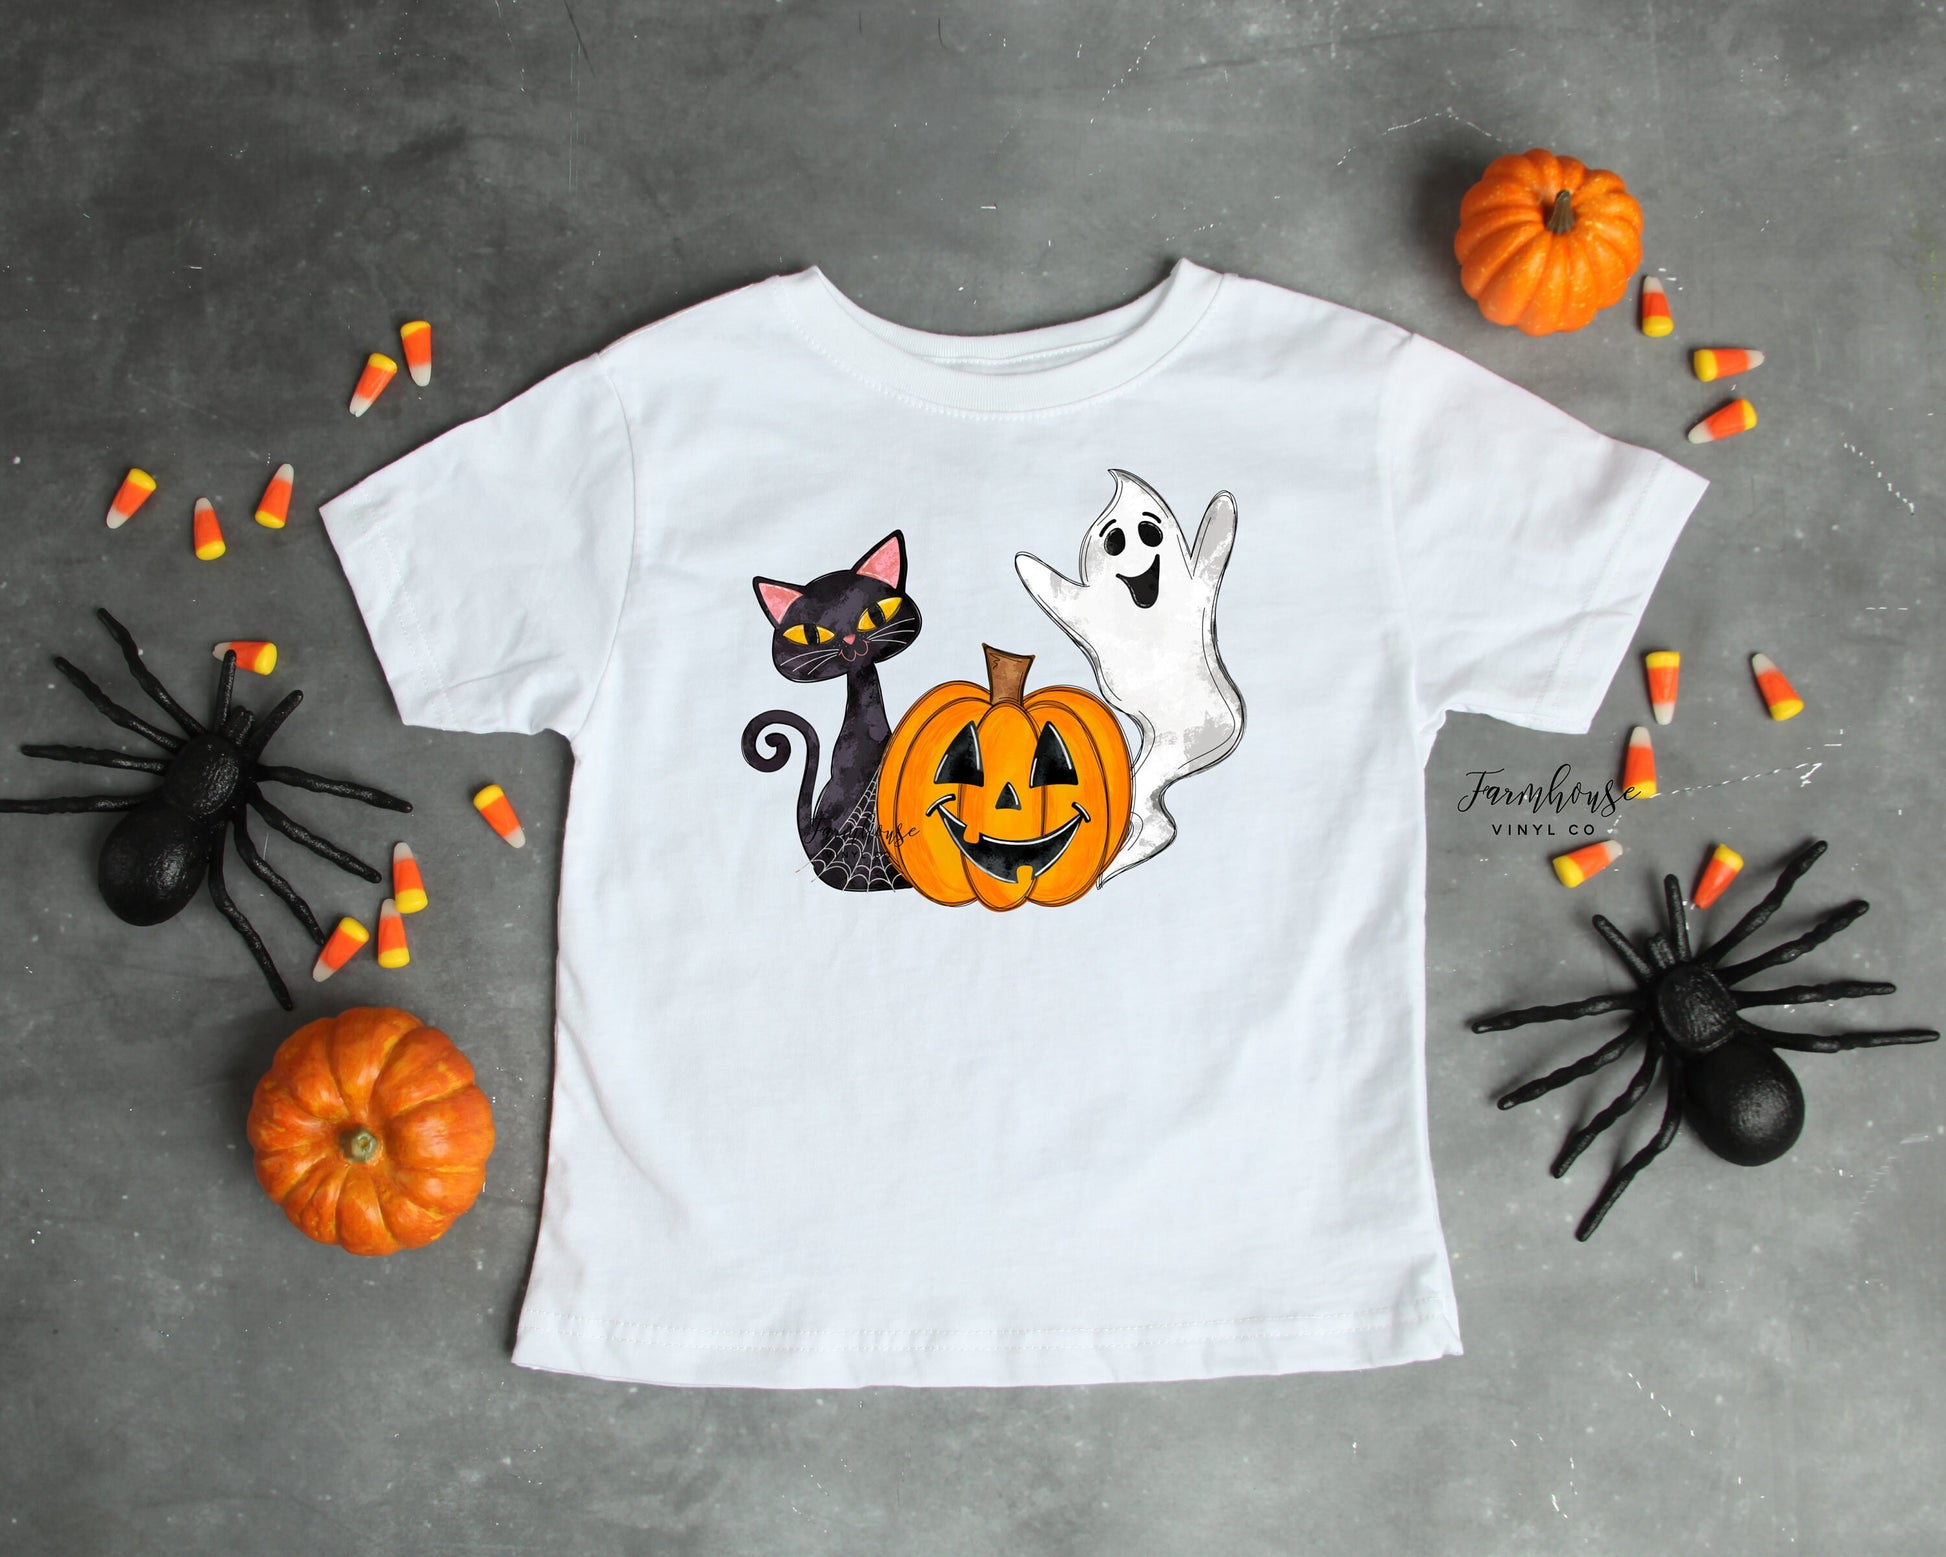 Halloween Cat Ghost Family Matching Shirts / Little Thing Halloween T Shirt / Group Shirts Teachers Family Friends / Halloween Party Tees - Farmhouse Vinyl Co